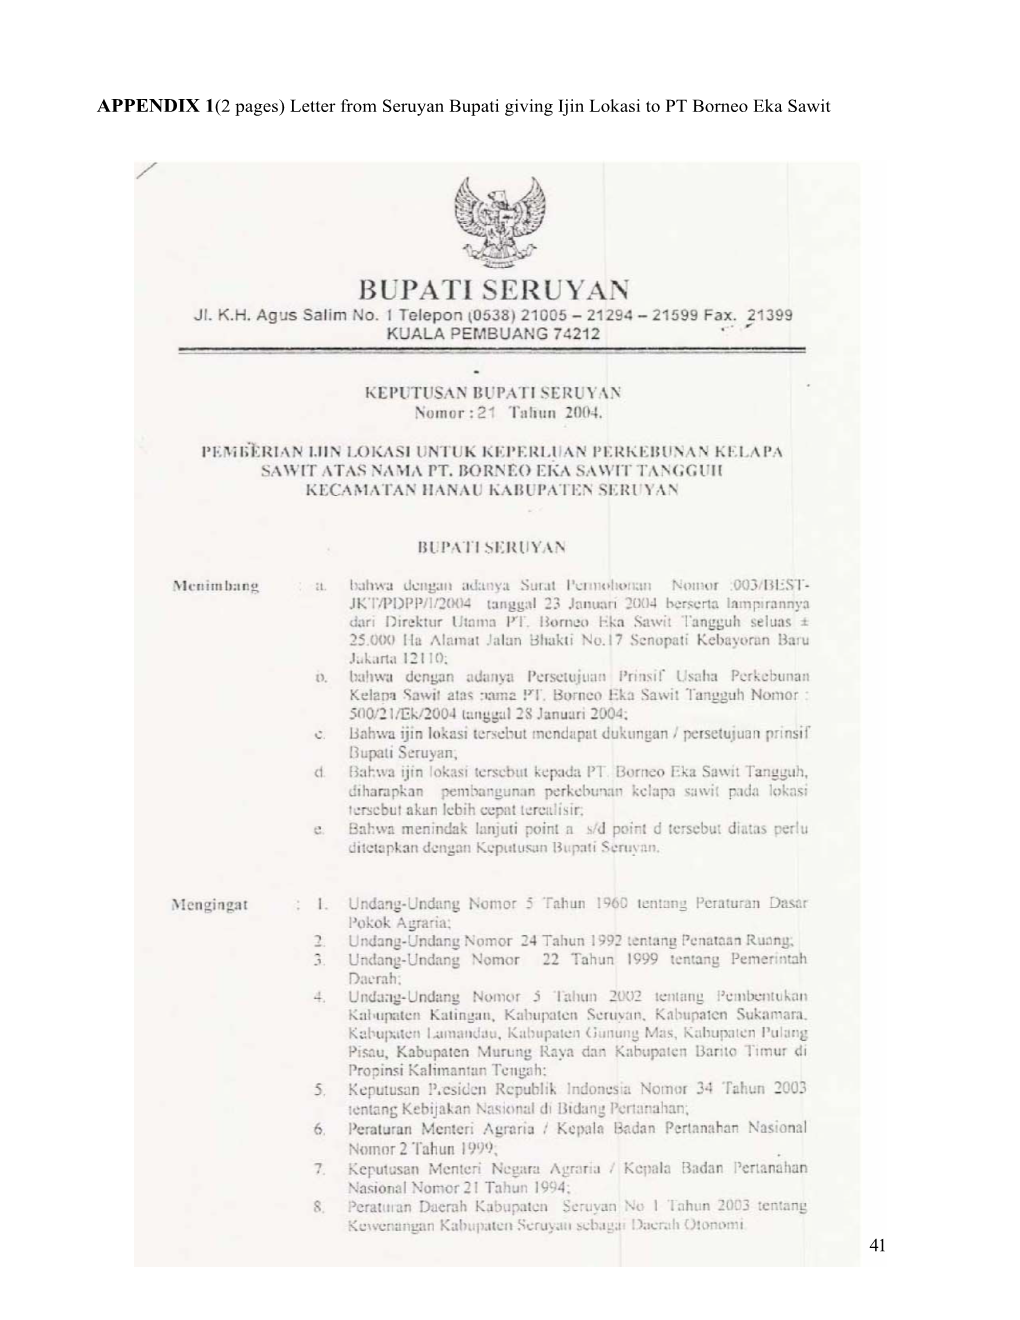 Letter from Seruyan Bupati Giving Ijin Lokasi to PT Borneo Eka Sawit